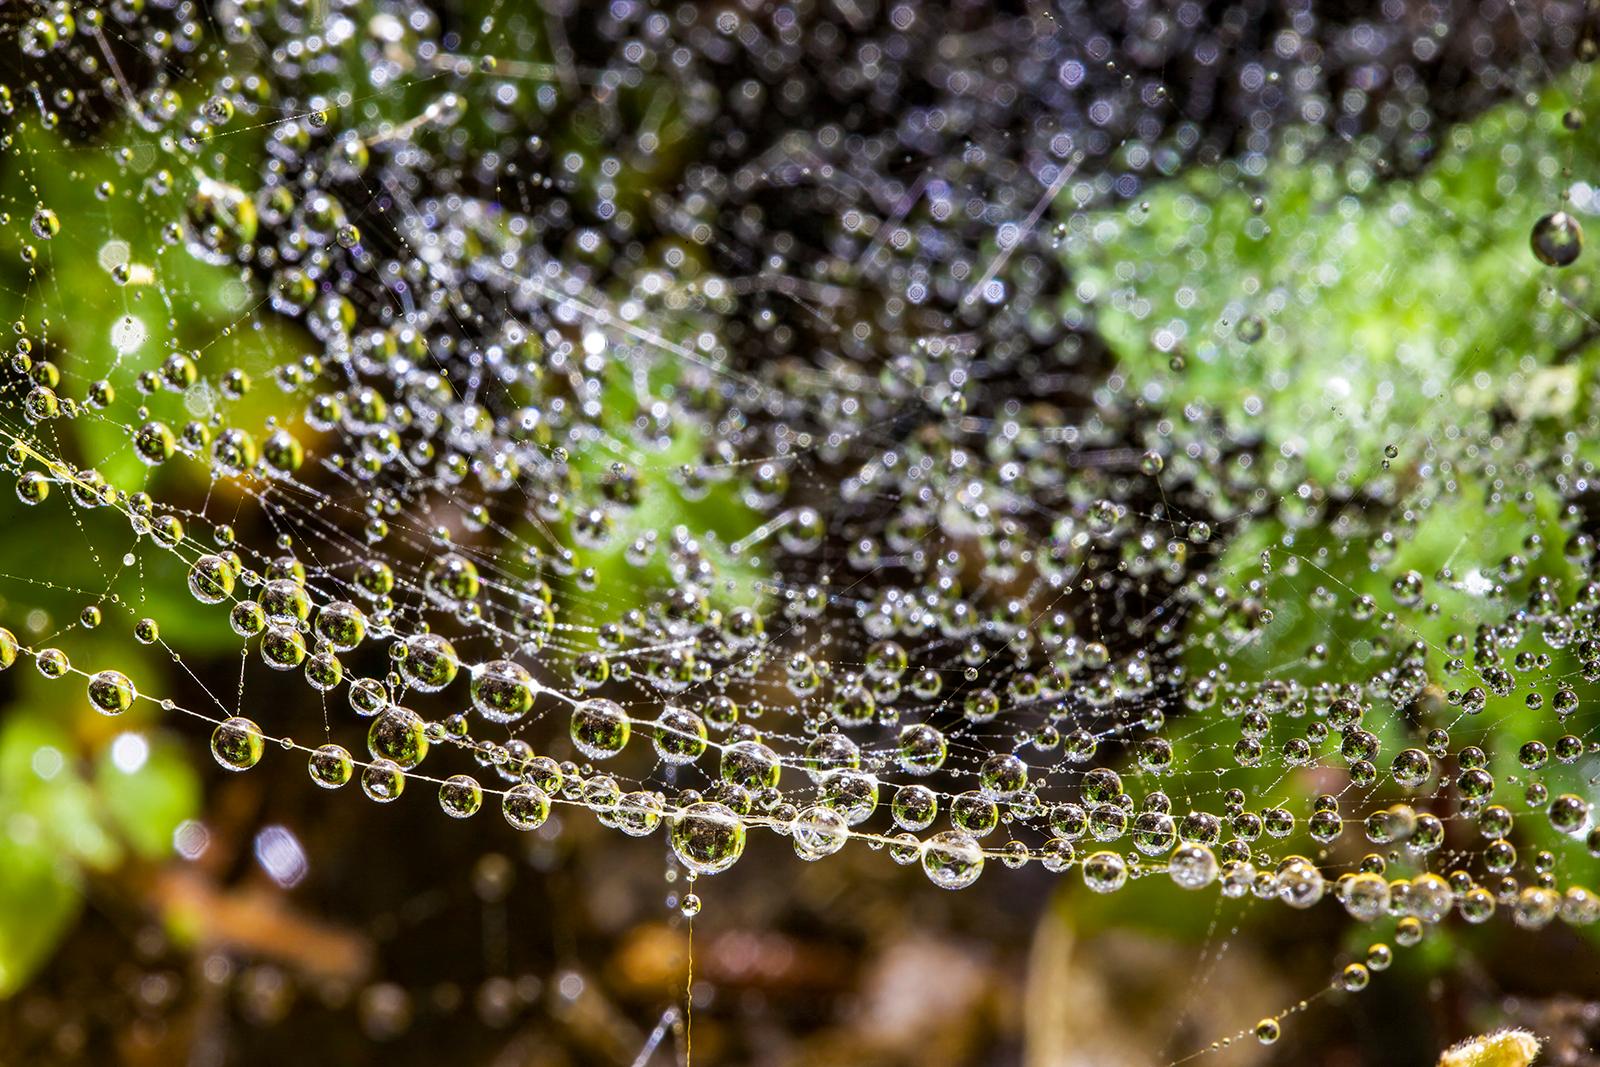 Droplets 1 - Nature limitierte Auflage, Floral grün braun, Contemporary